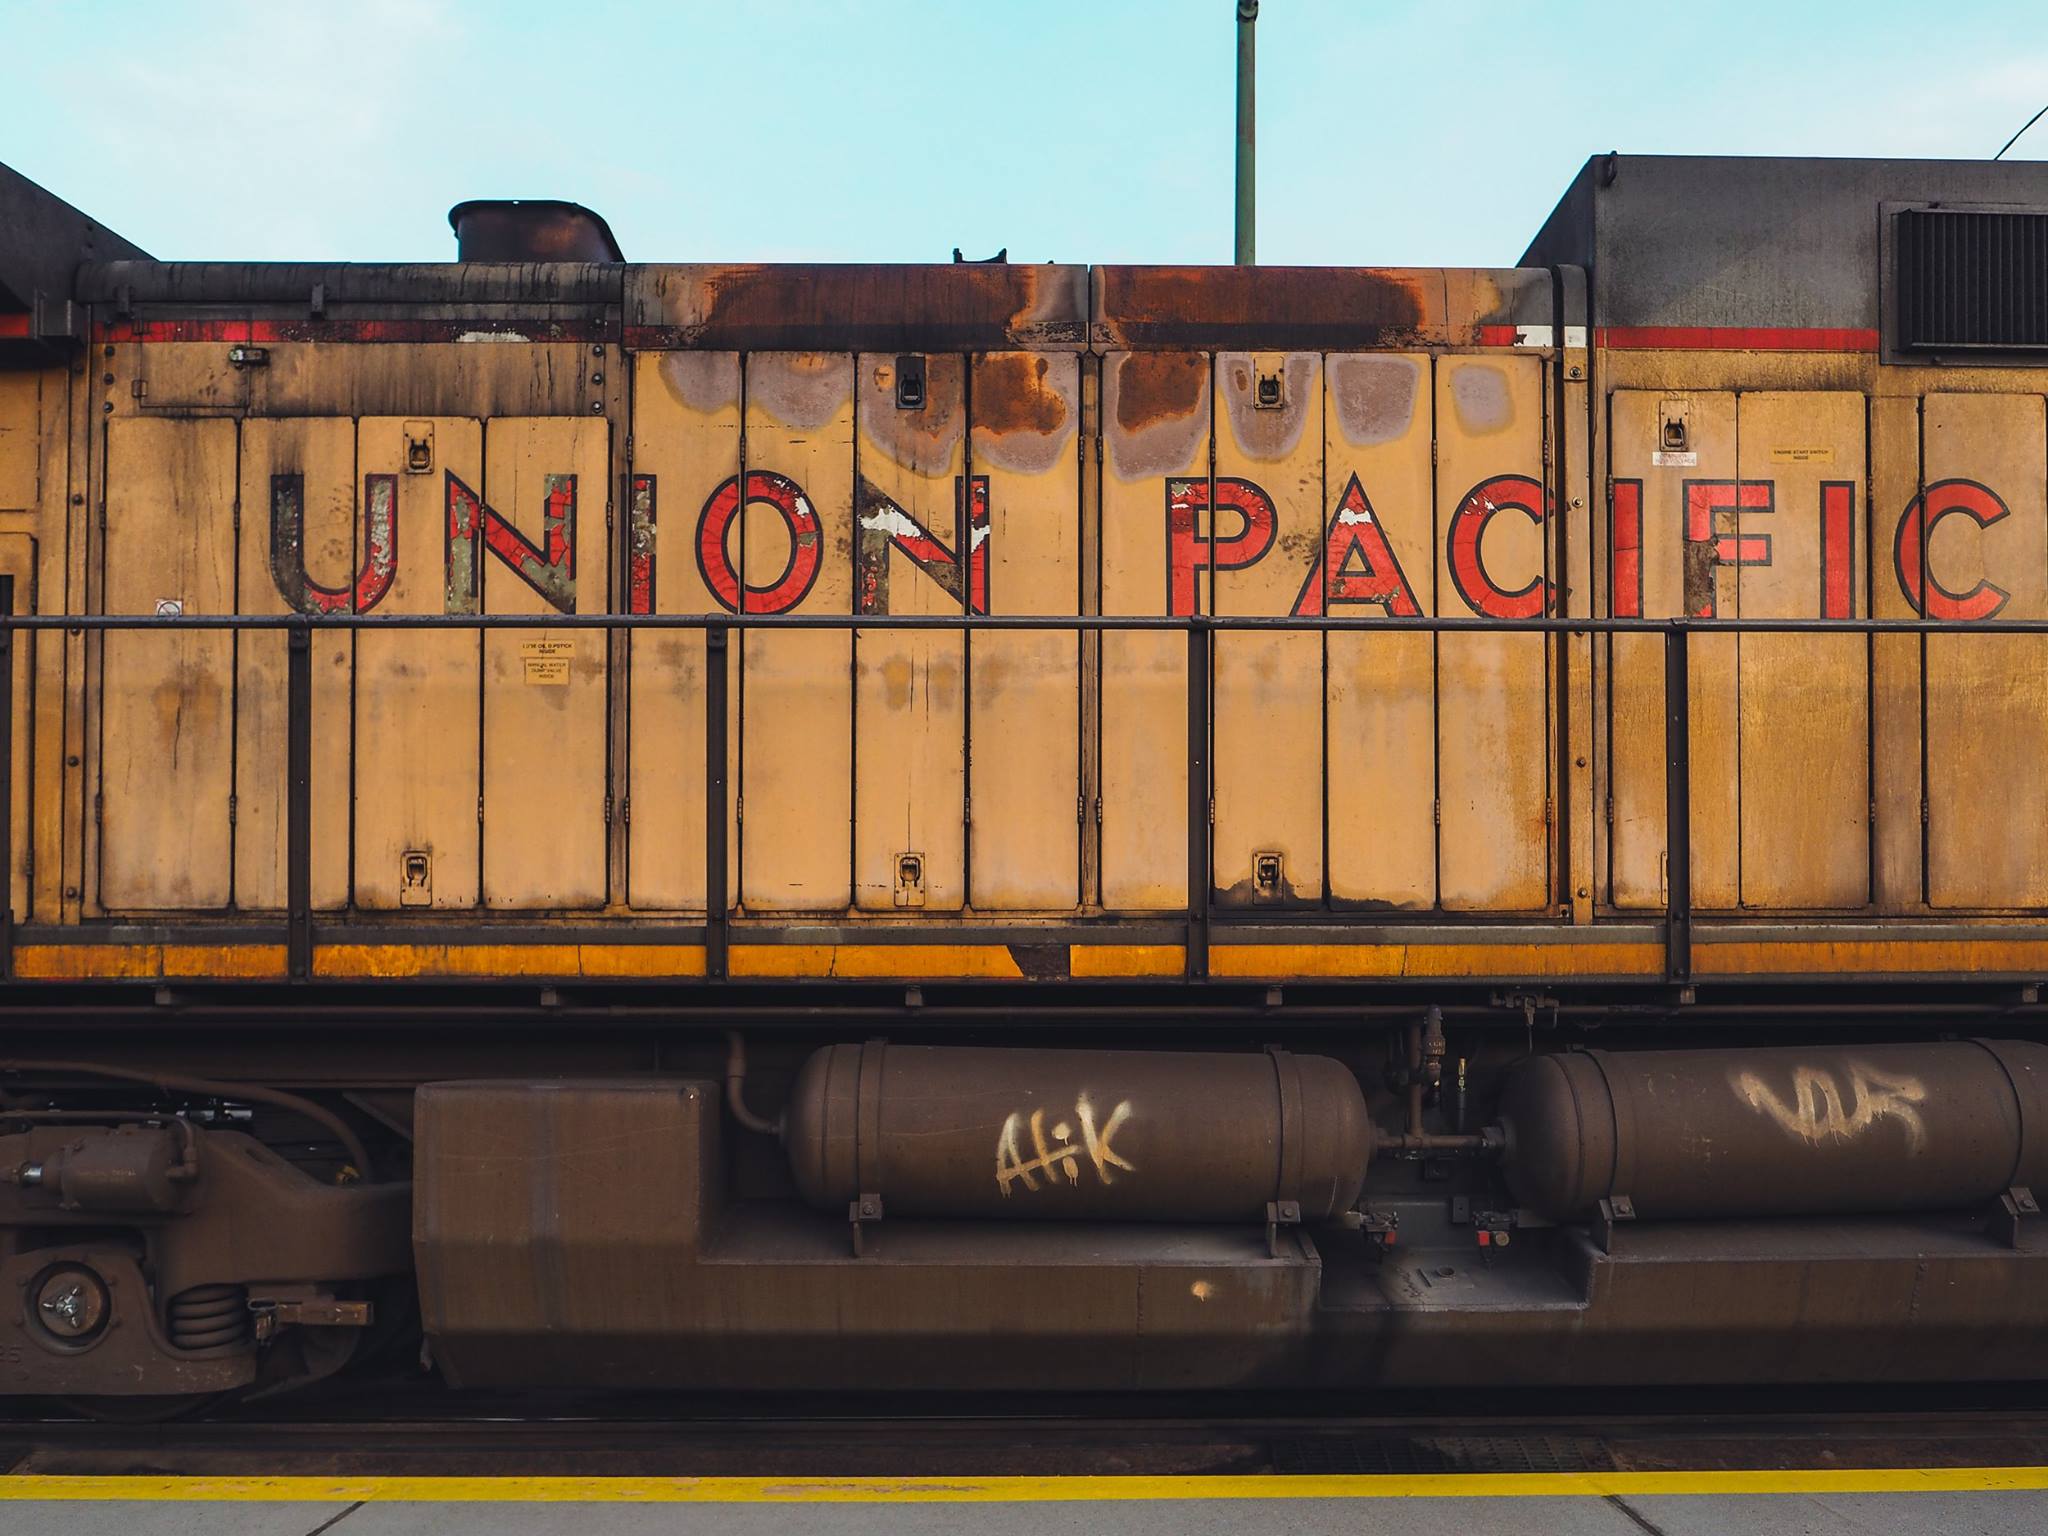 La Union Pacific Railways